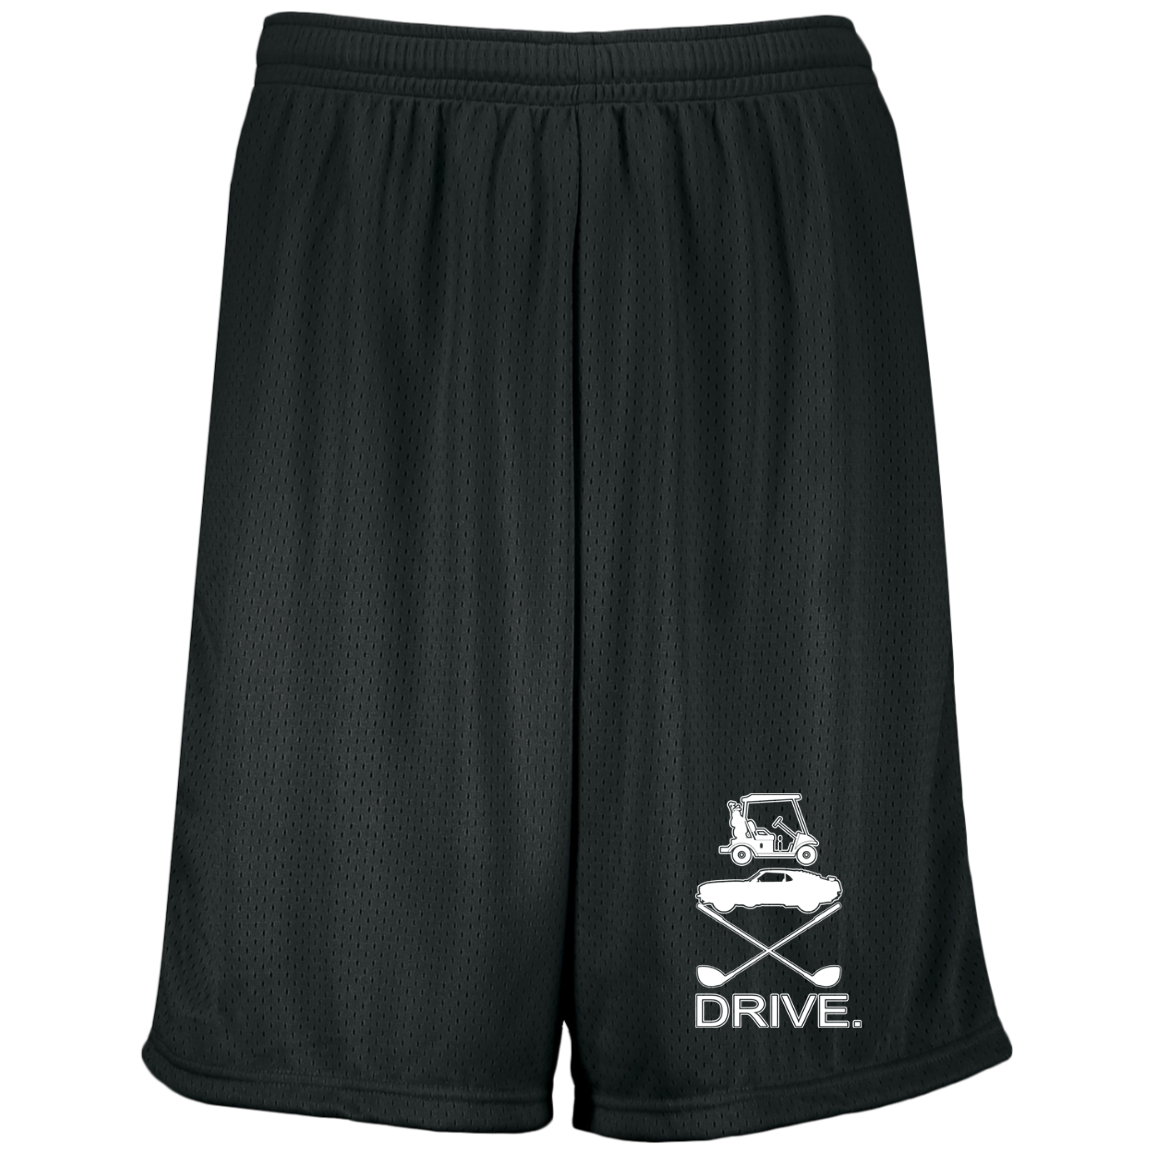 OPG Custom Design #8. Drive. Moisture-Wicking 9 inch Inseam Mesh Shorts